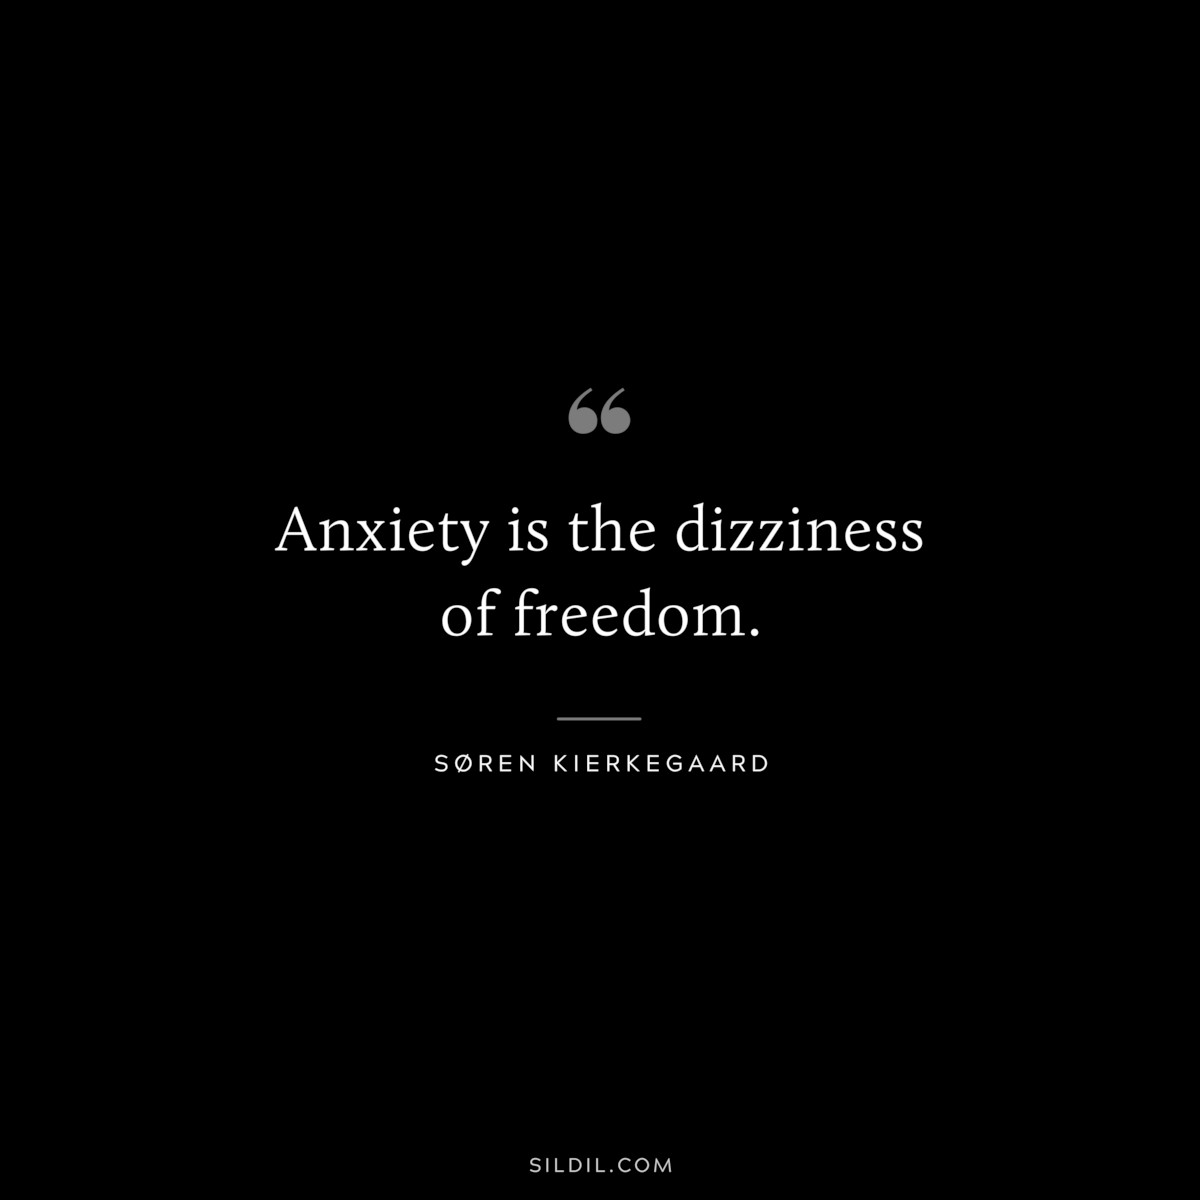 Anxiety is the dizziness of freedom. ― Søren Kierkegaard